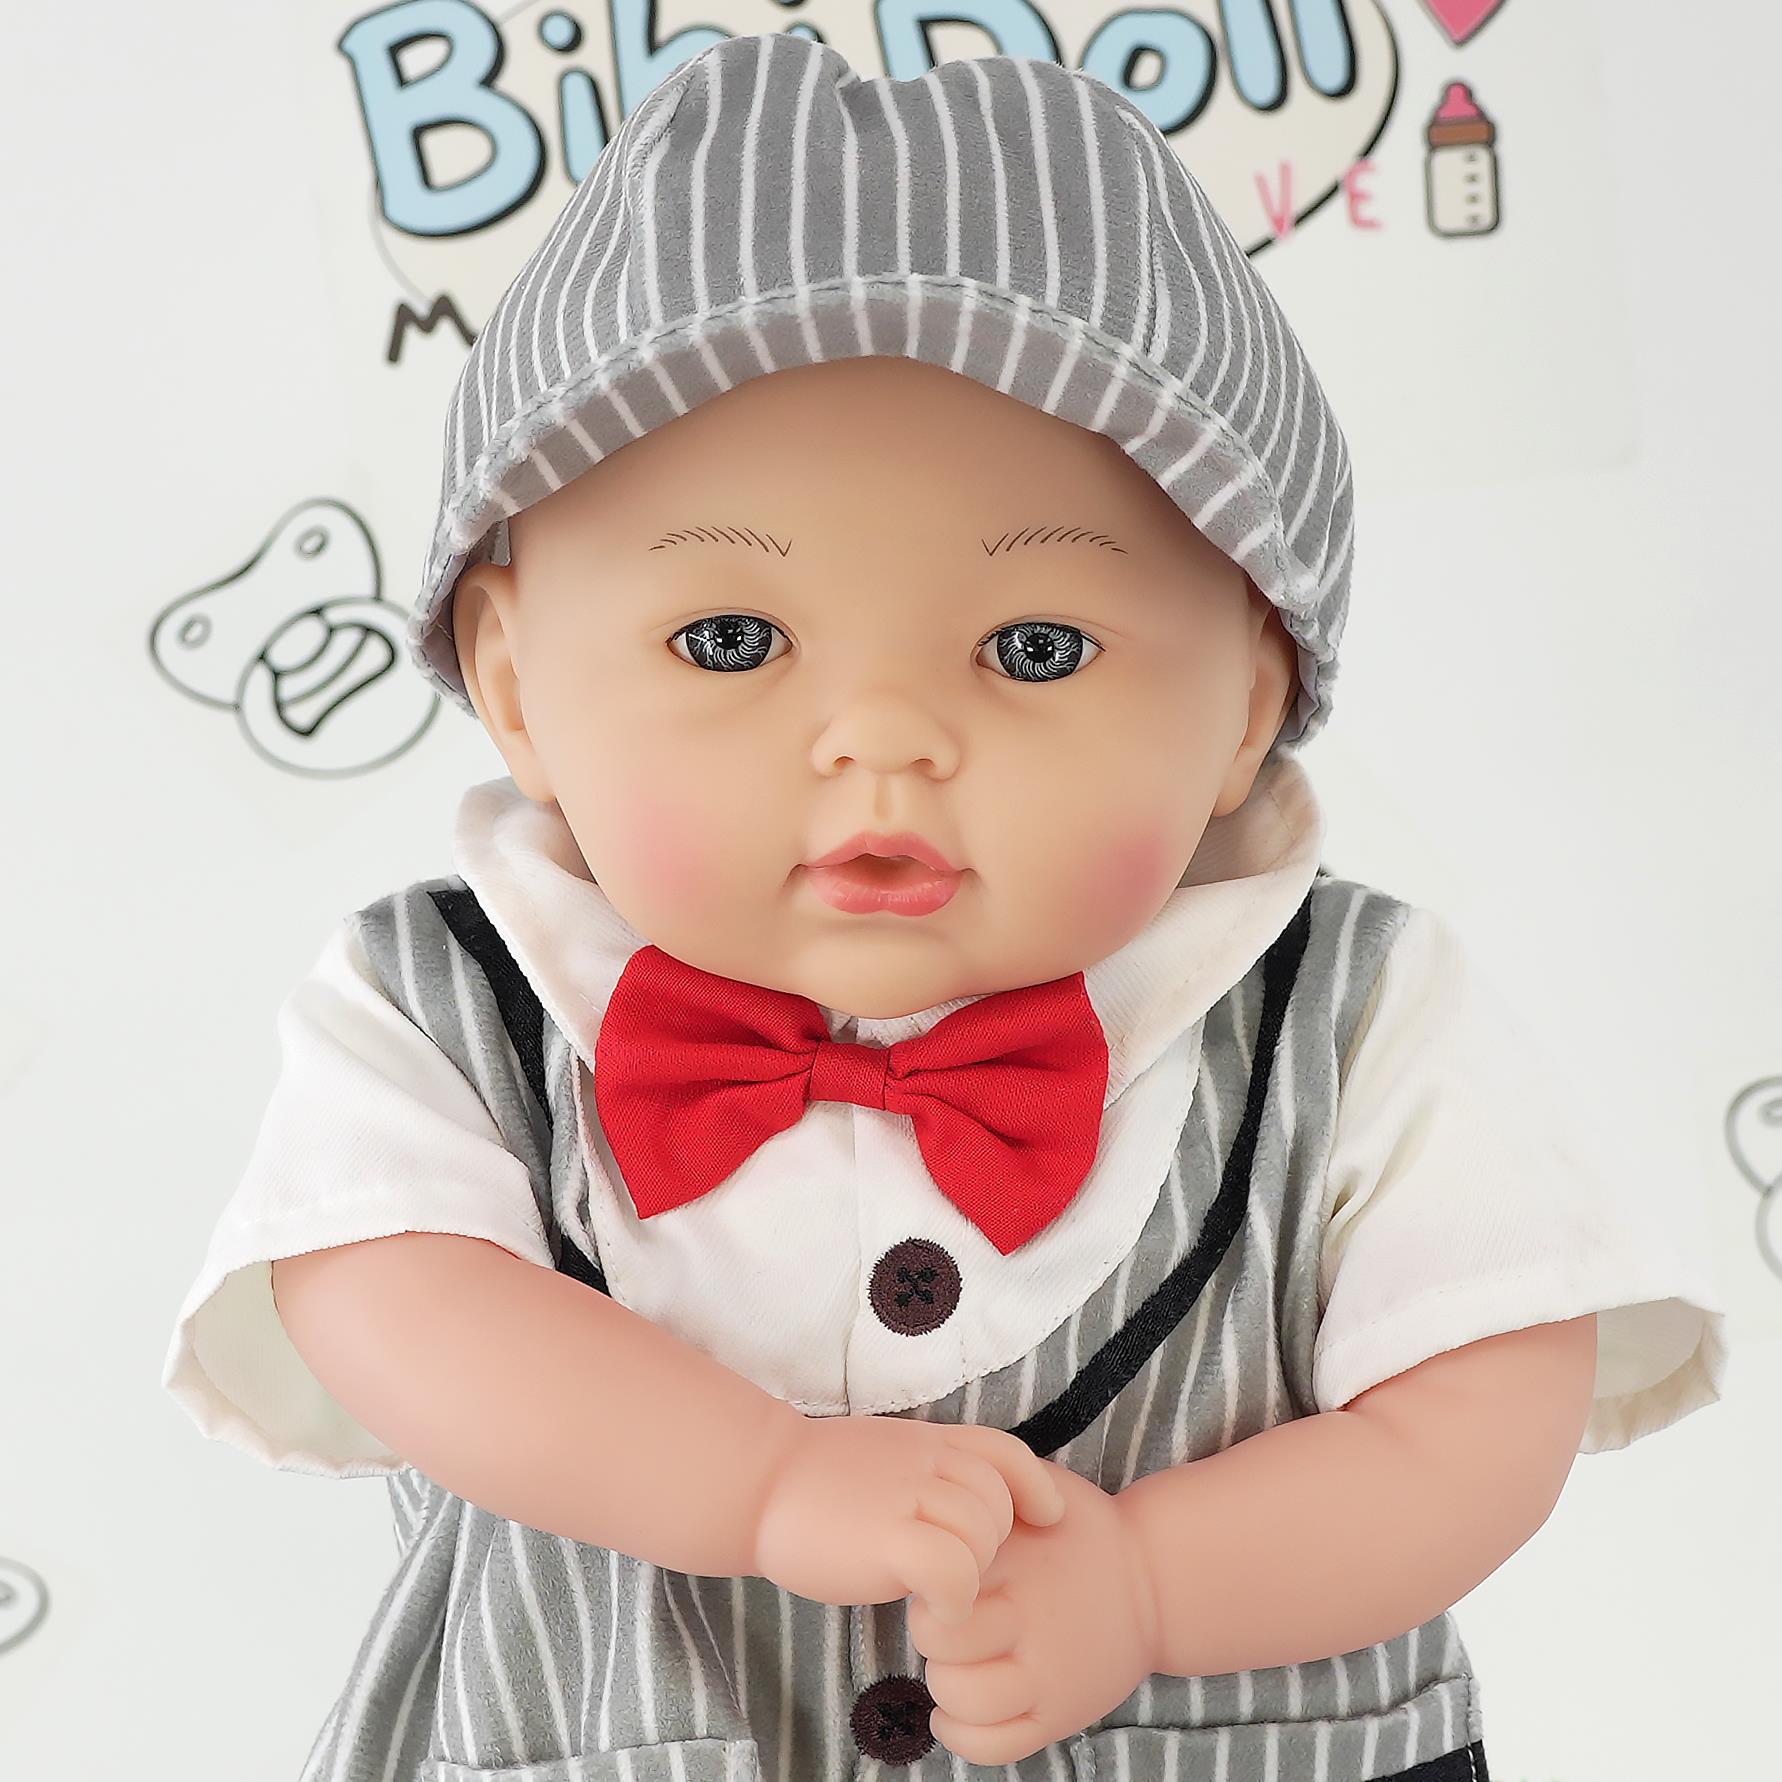 BiBi Baby Doll - Charlie (45 cm / 18") by BiBi Doll - The Magic Toy Shop